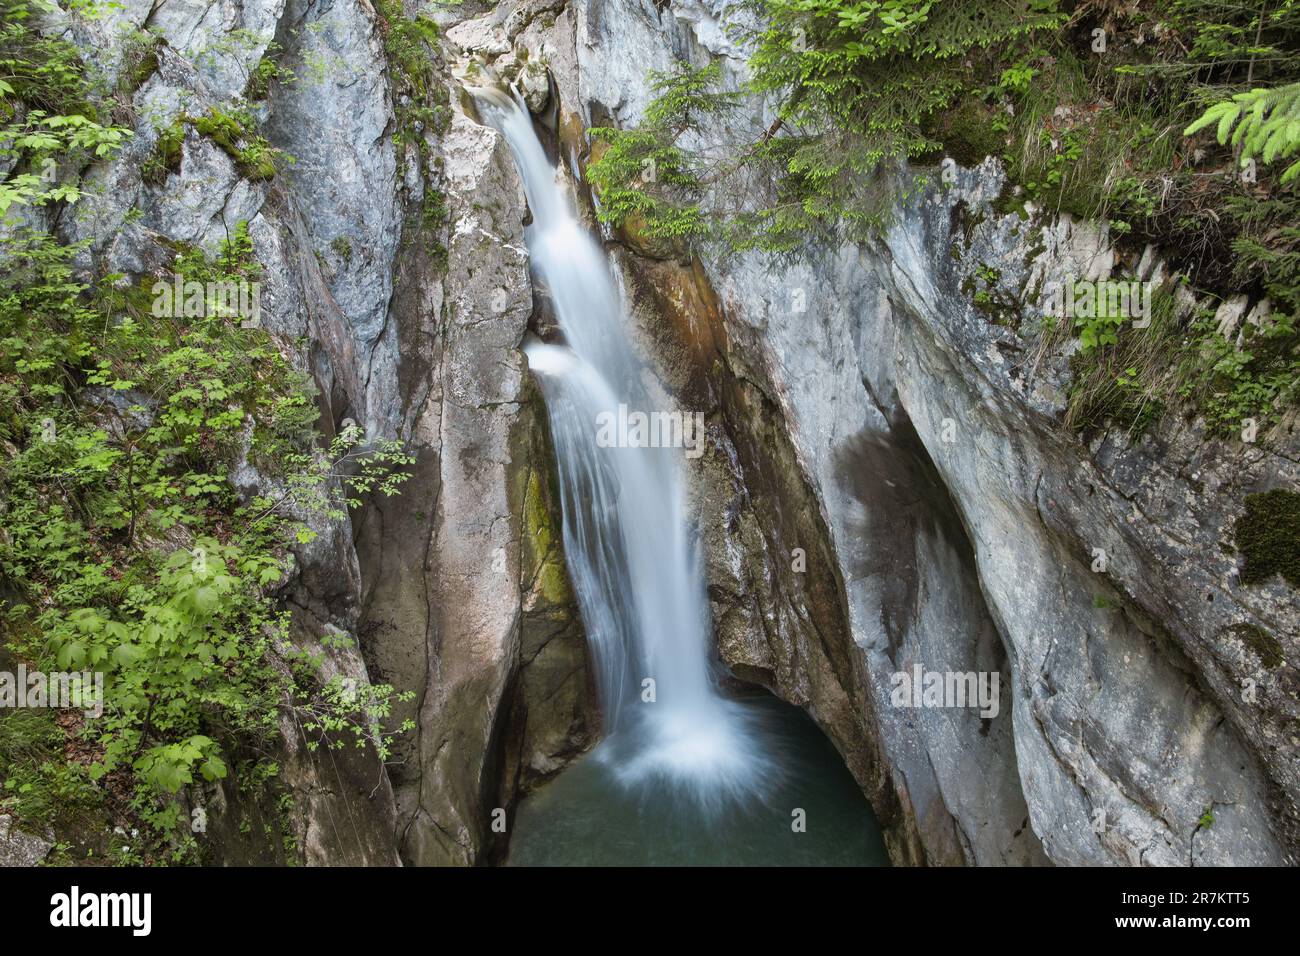 Tatzelwurm waterfalls on river Auerbach in Oberaudorf - Germany Stock Photo